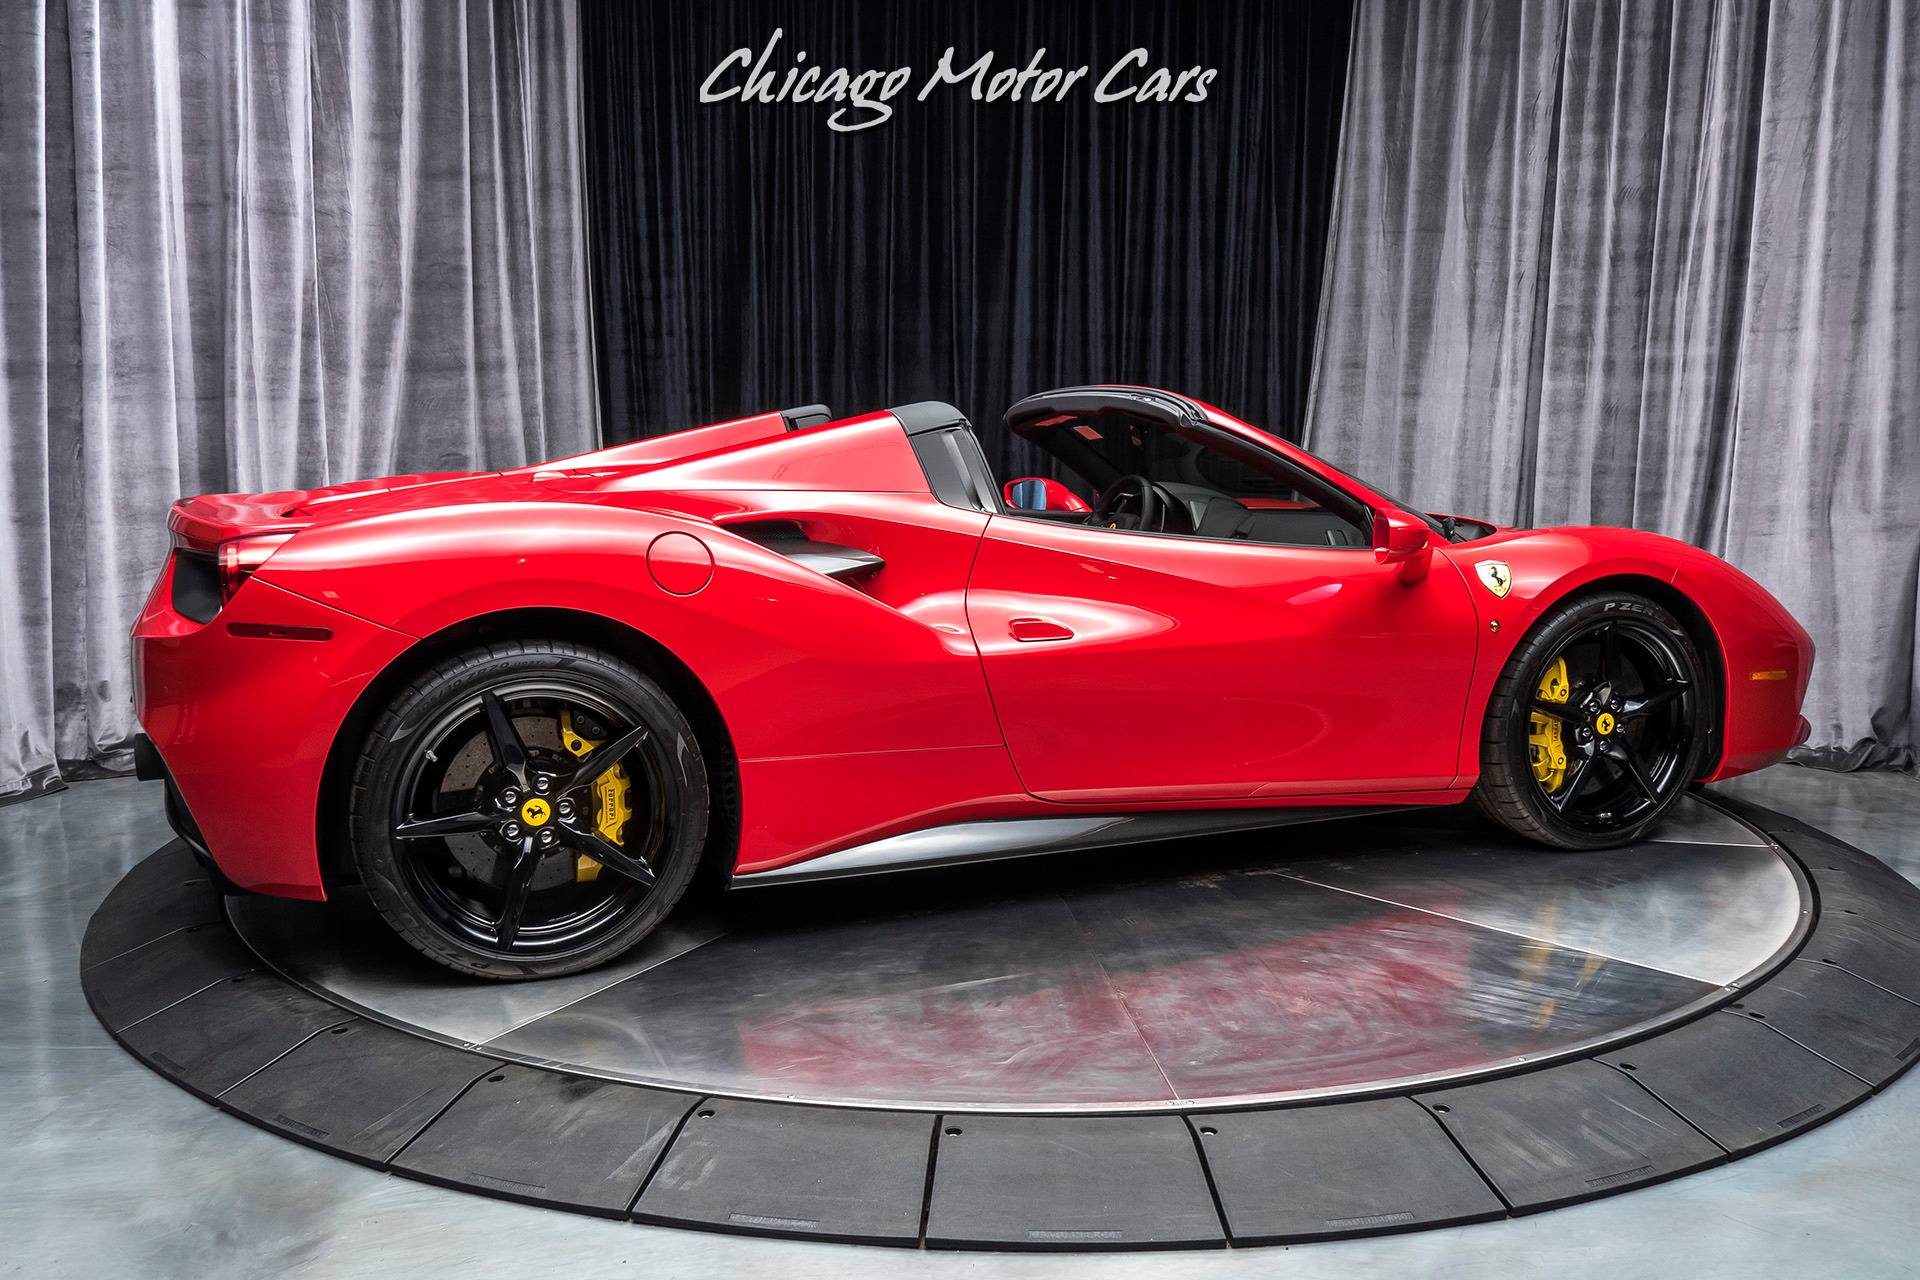 For sale : 2018 Ferrari 488 Spider - Chicago Motor Cars - United States - For sale on LuxuryPulse.